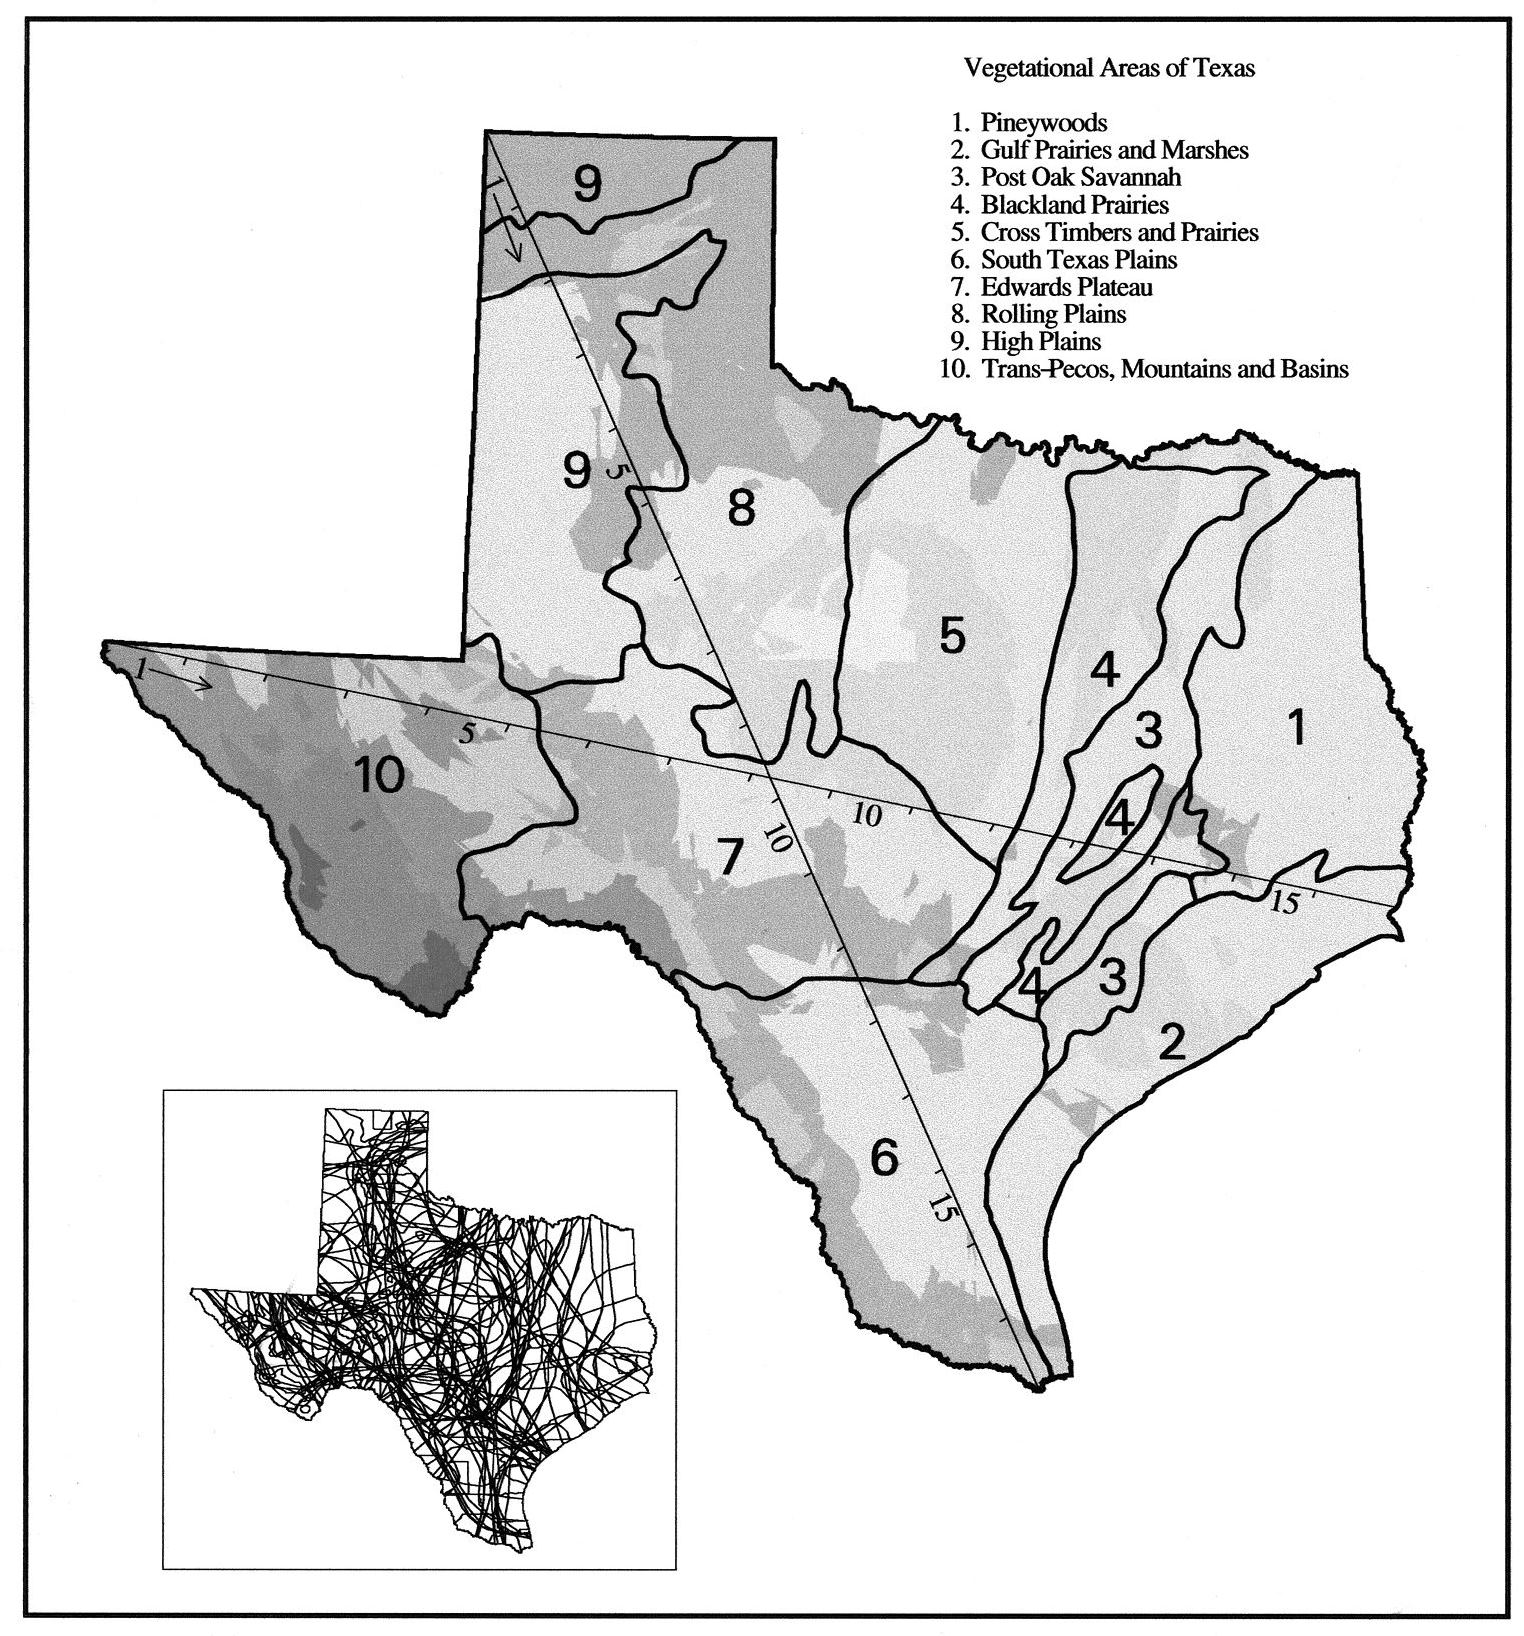 Vegetational Areas of Texas